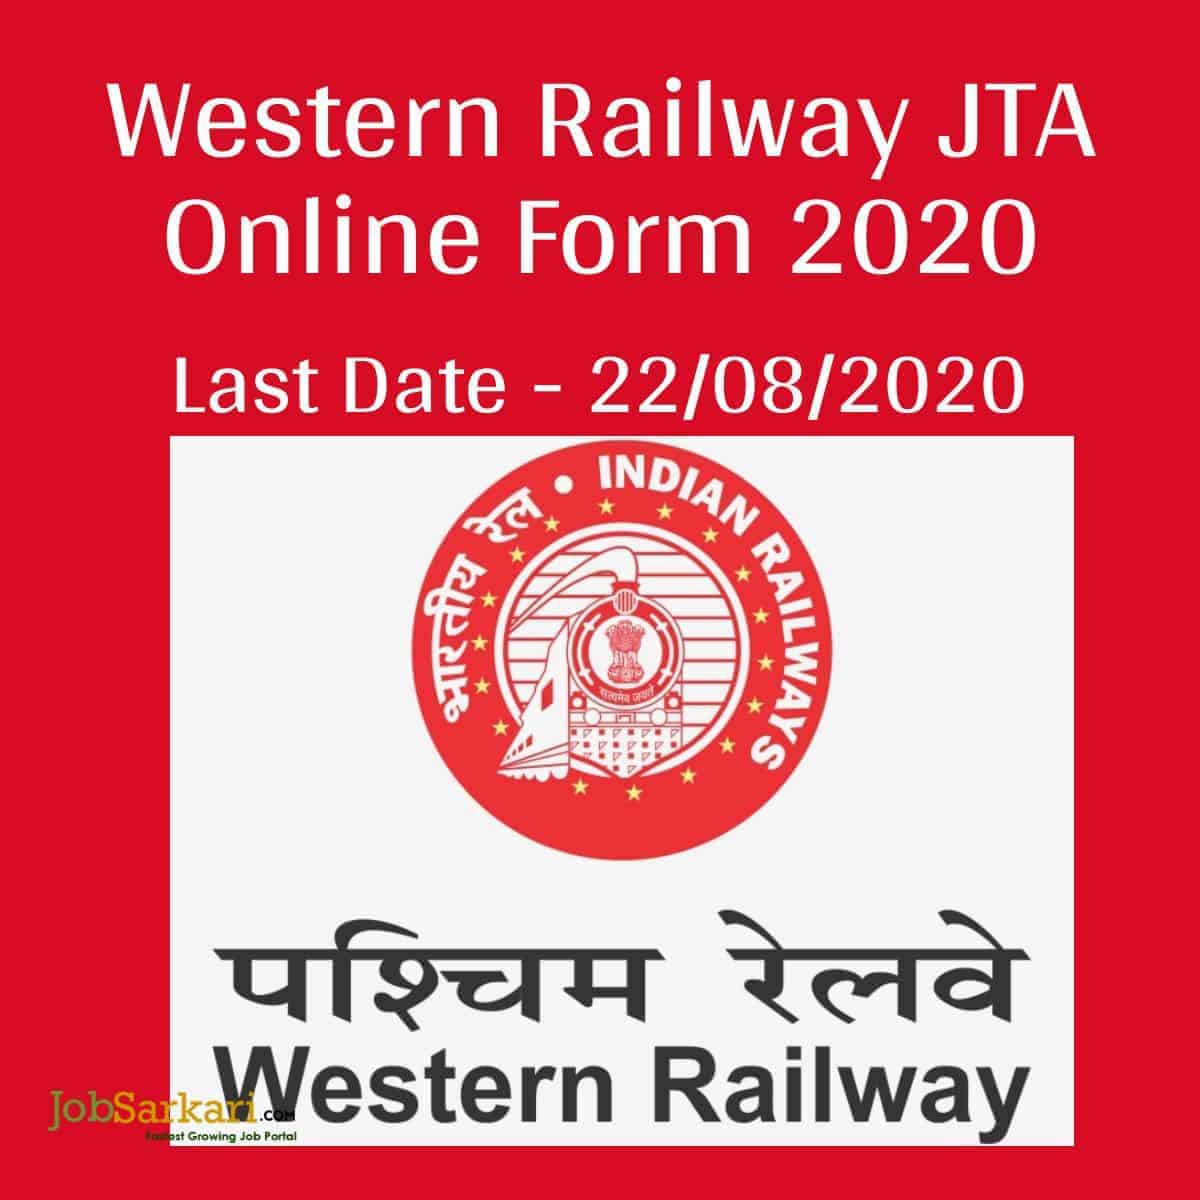 Western Railway JTA Online Form 2020